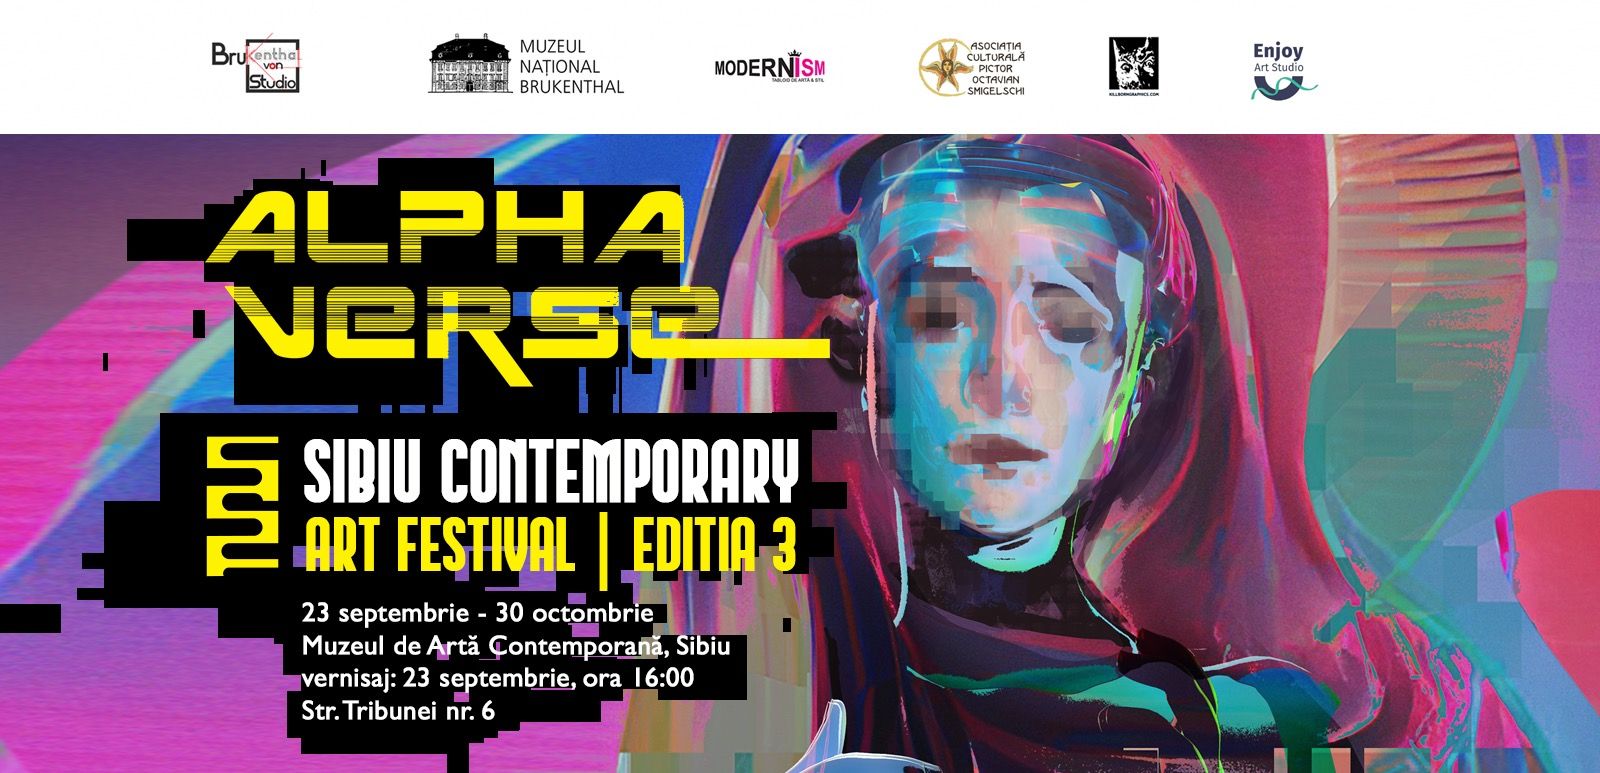 Sibiu Contemporary Art Festival începe vineri, 23 septembrie